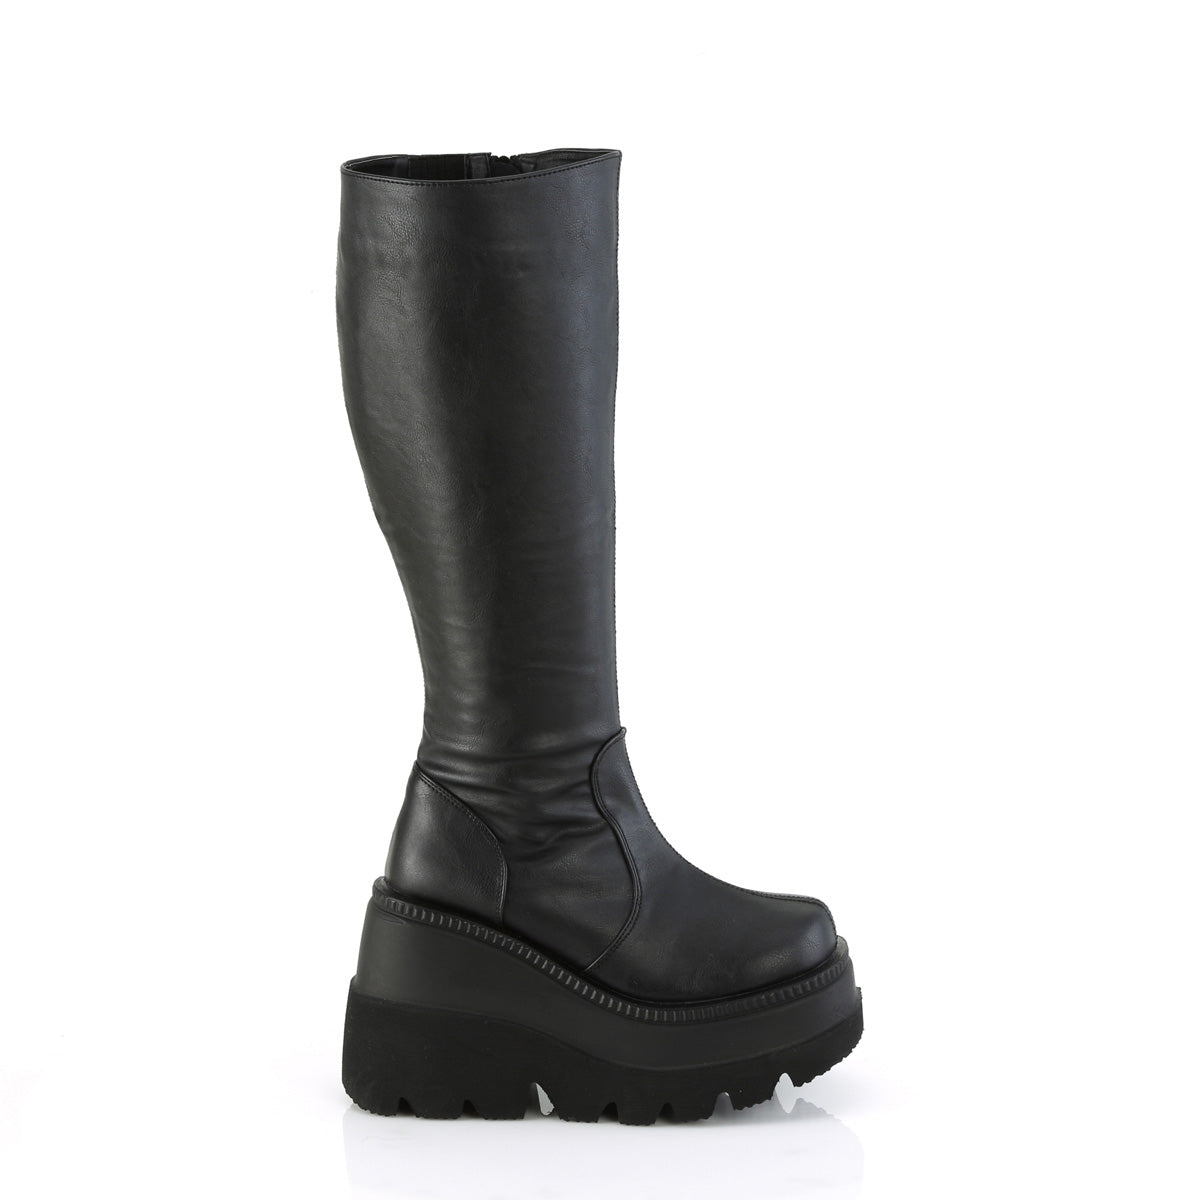 SHAKER-100WC Demonia Black Vegan Leather Women's Mid-Calf & Knee High Boots [Demonia Cult Alternative Footwear]